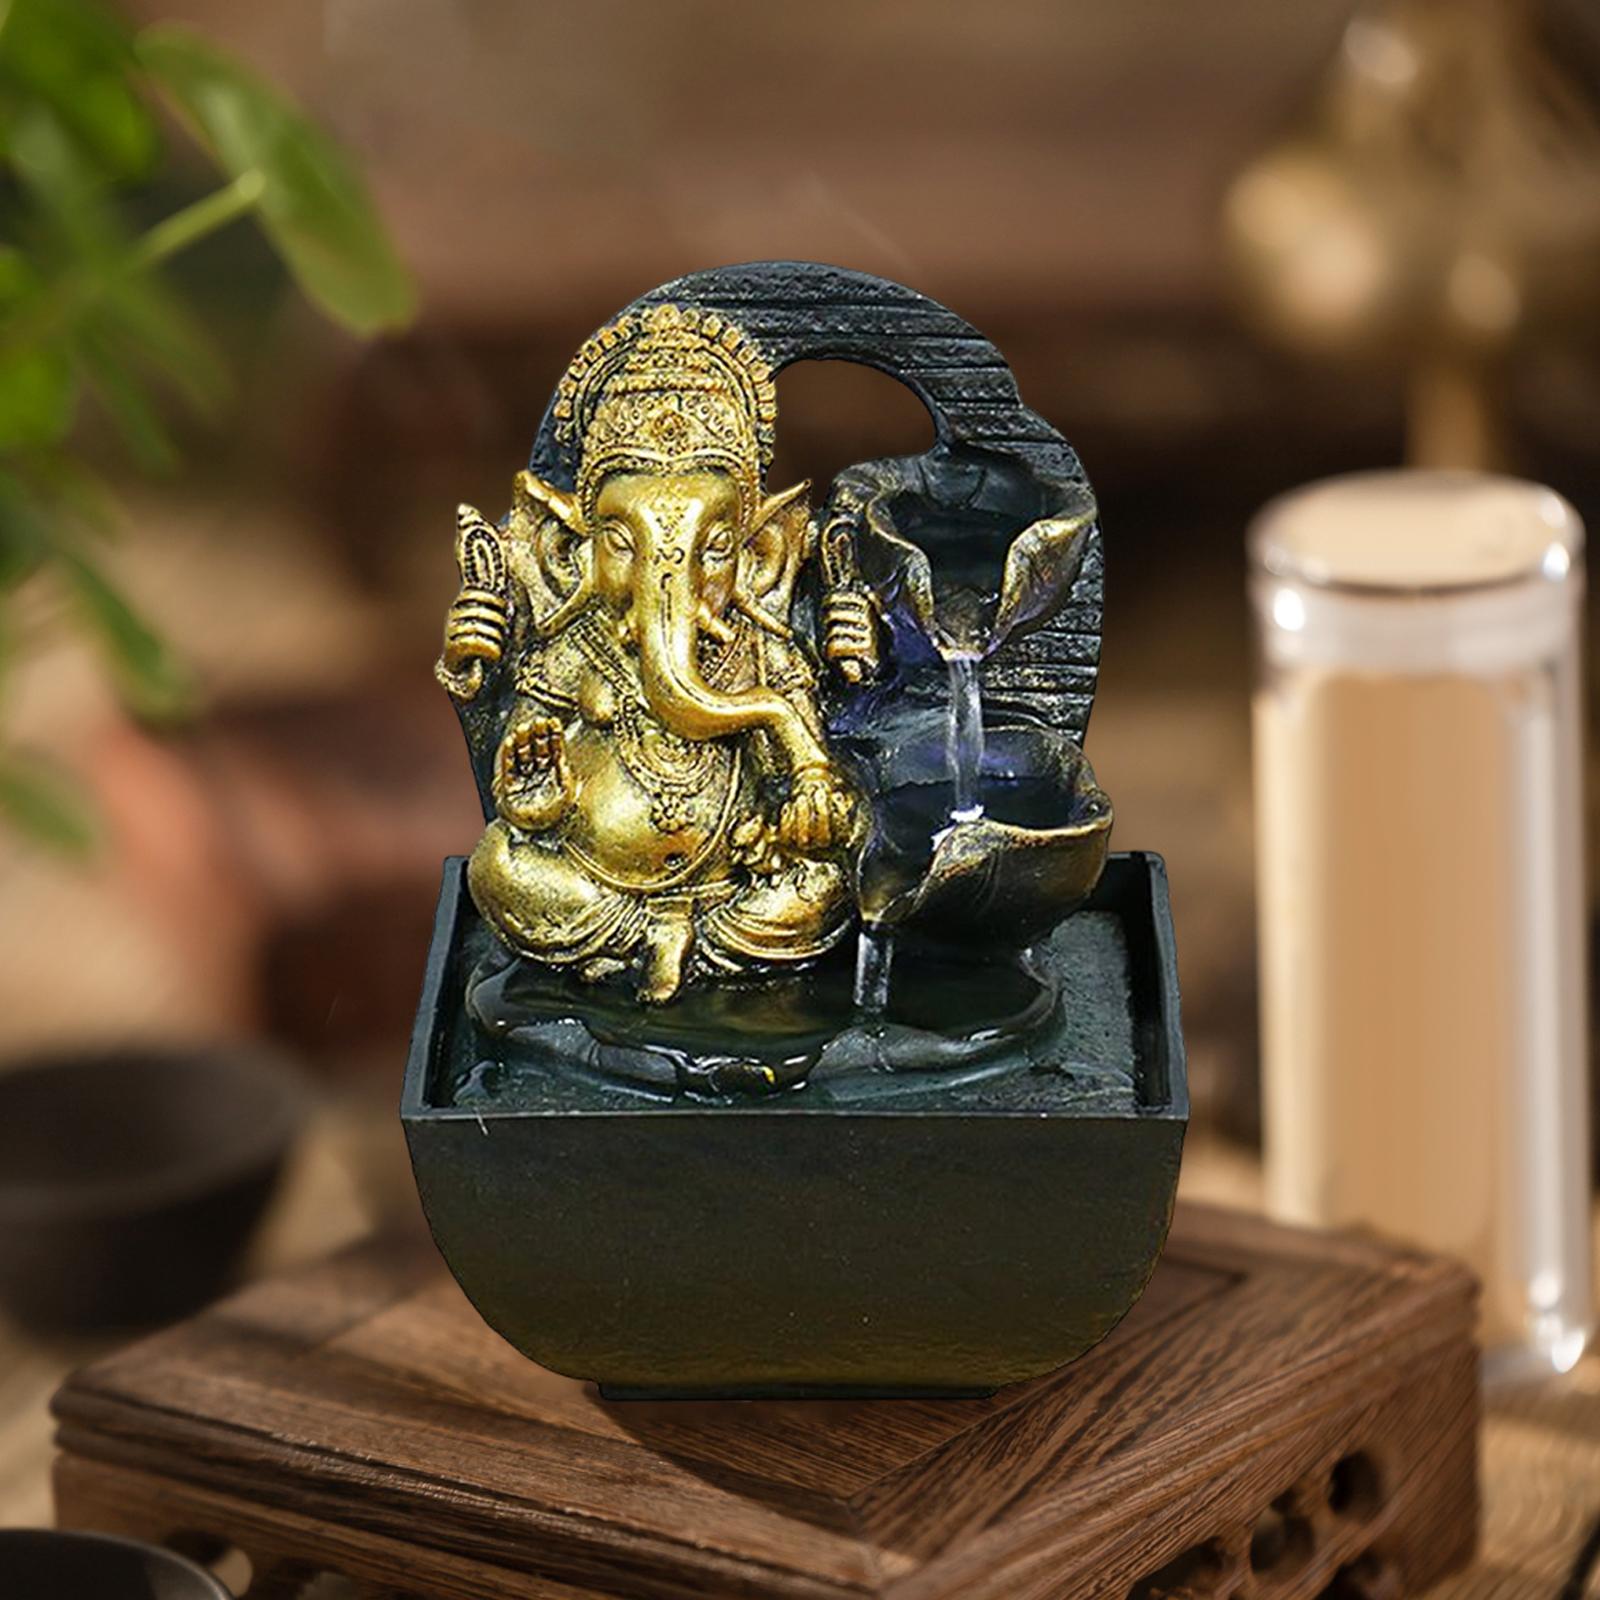 Ganesha Statues Indoor Tabletop Fountain Collectibles Decorative Gift 14cmx13.5cmx18cm